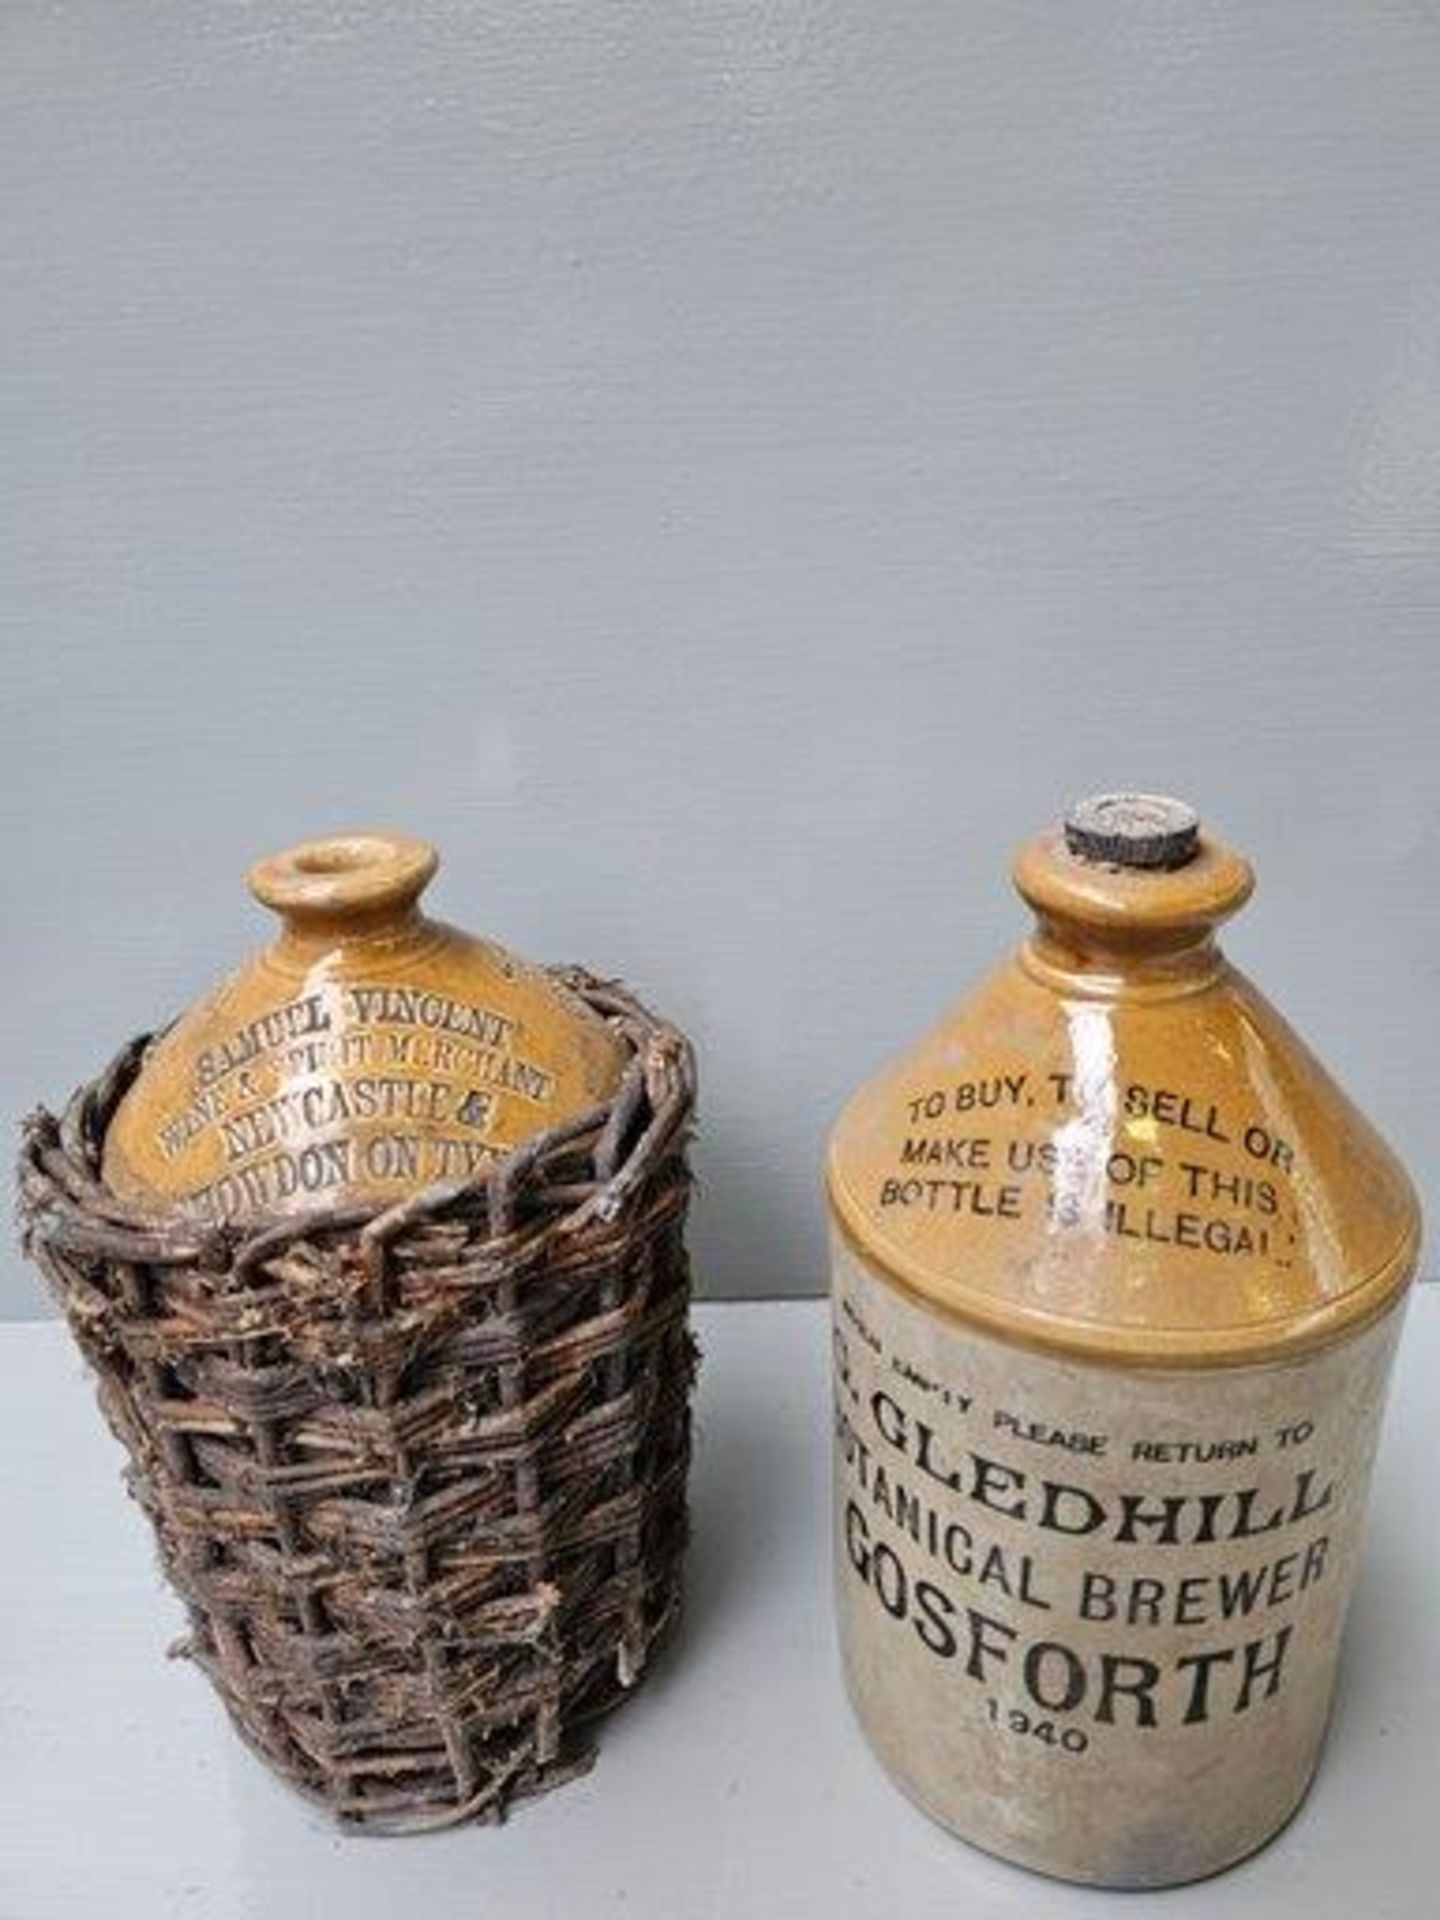 2 Flagons - Samuel Vincent, Newcastle & G Gledhill, Gosforth 1940, Creamware Jar & Bottle (A/F)